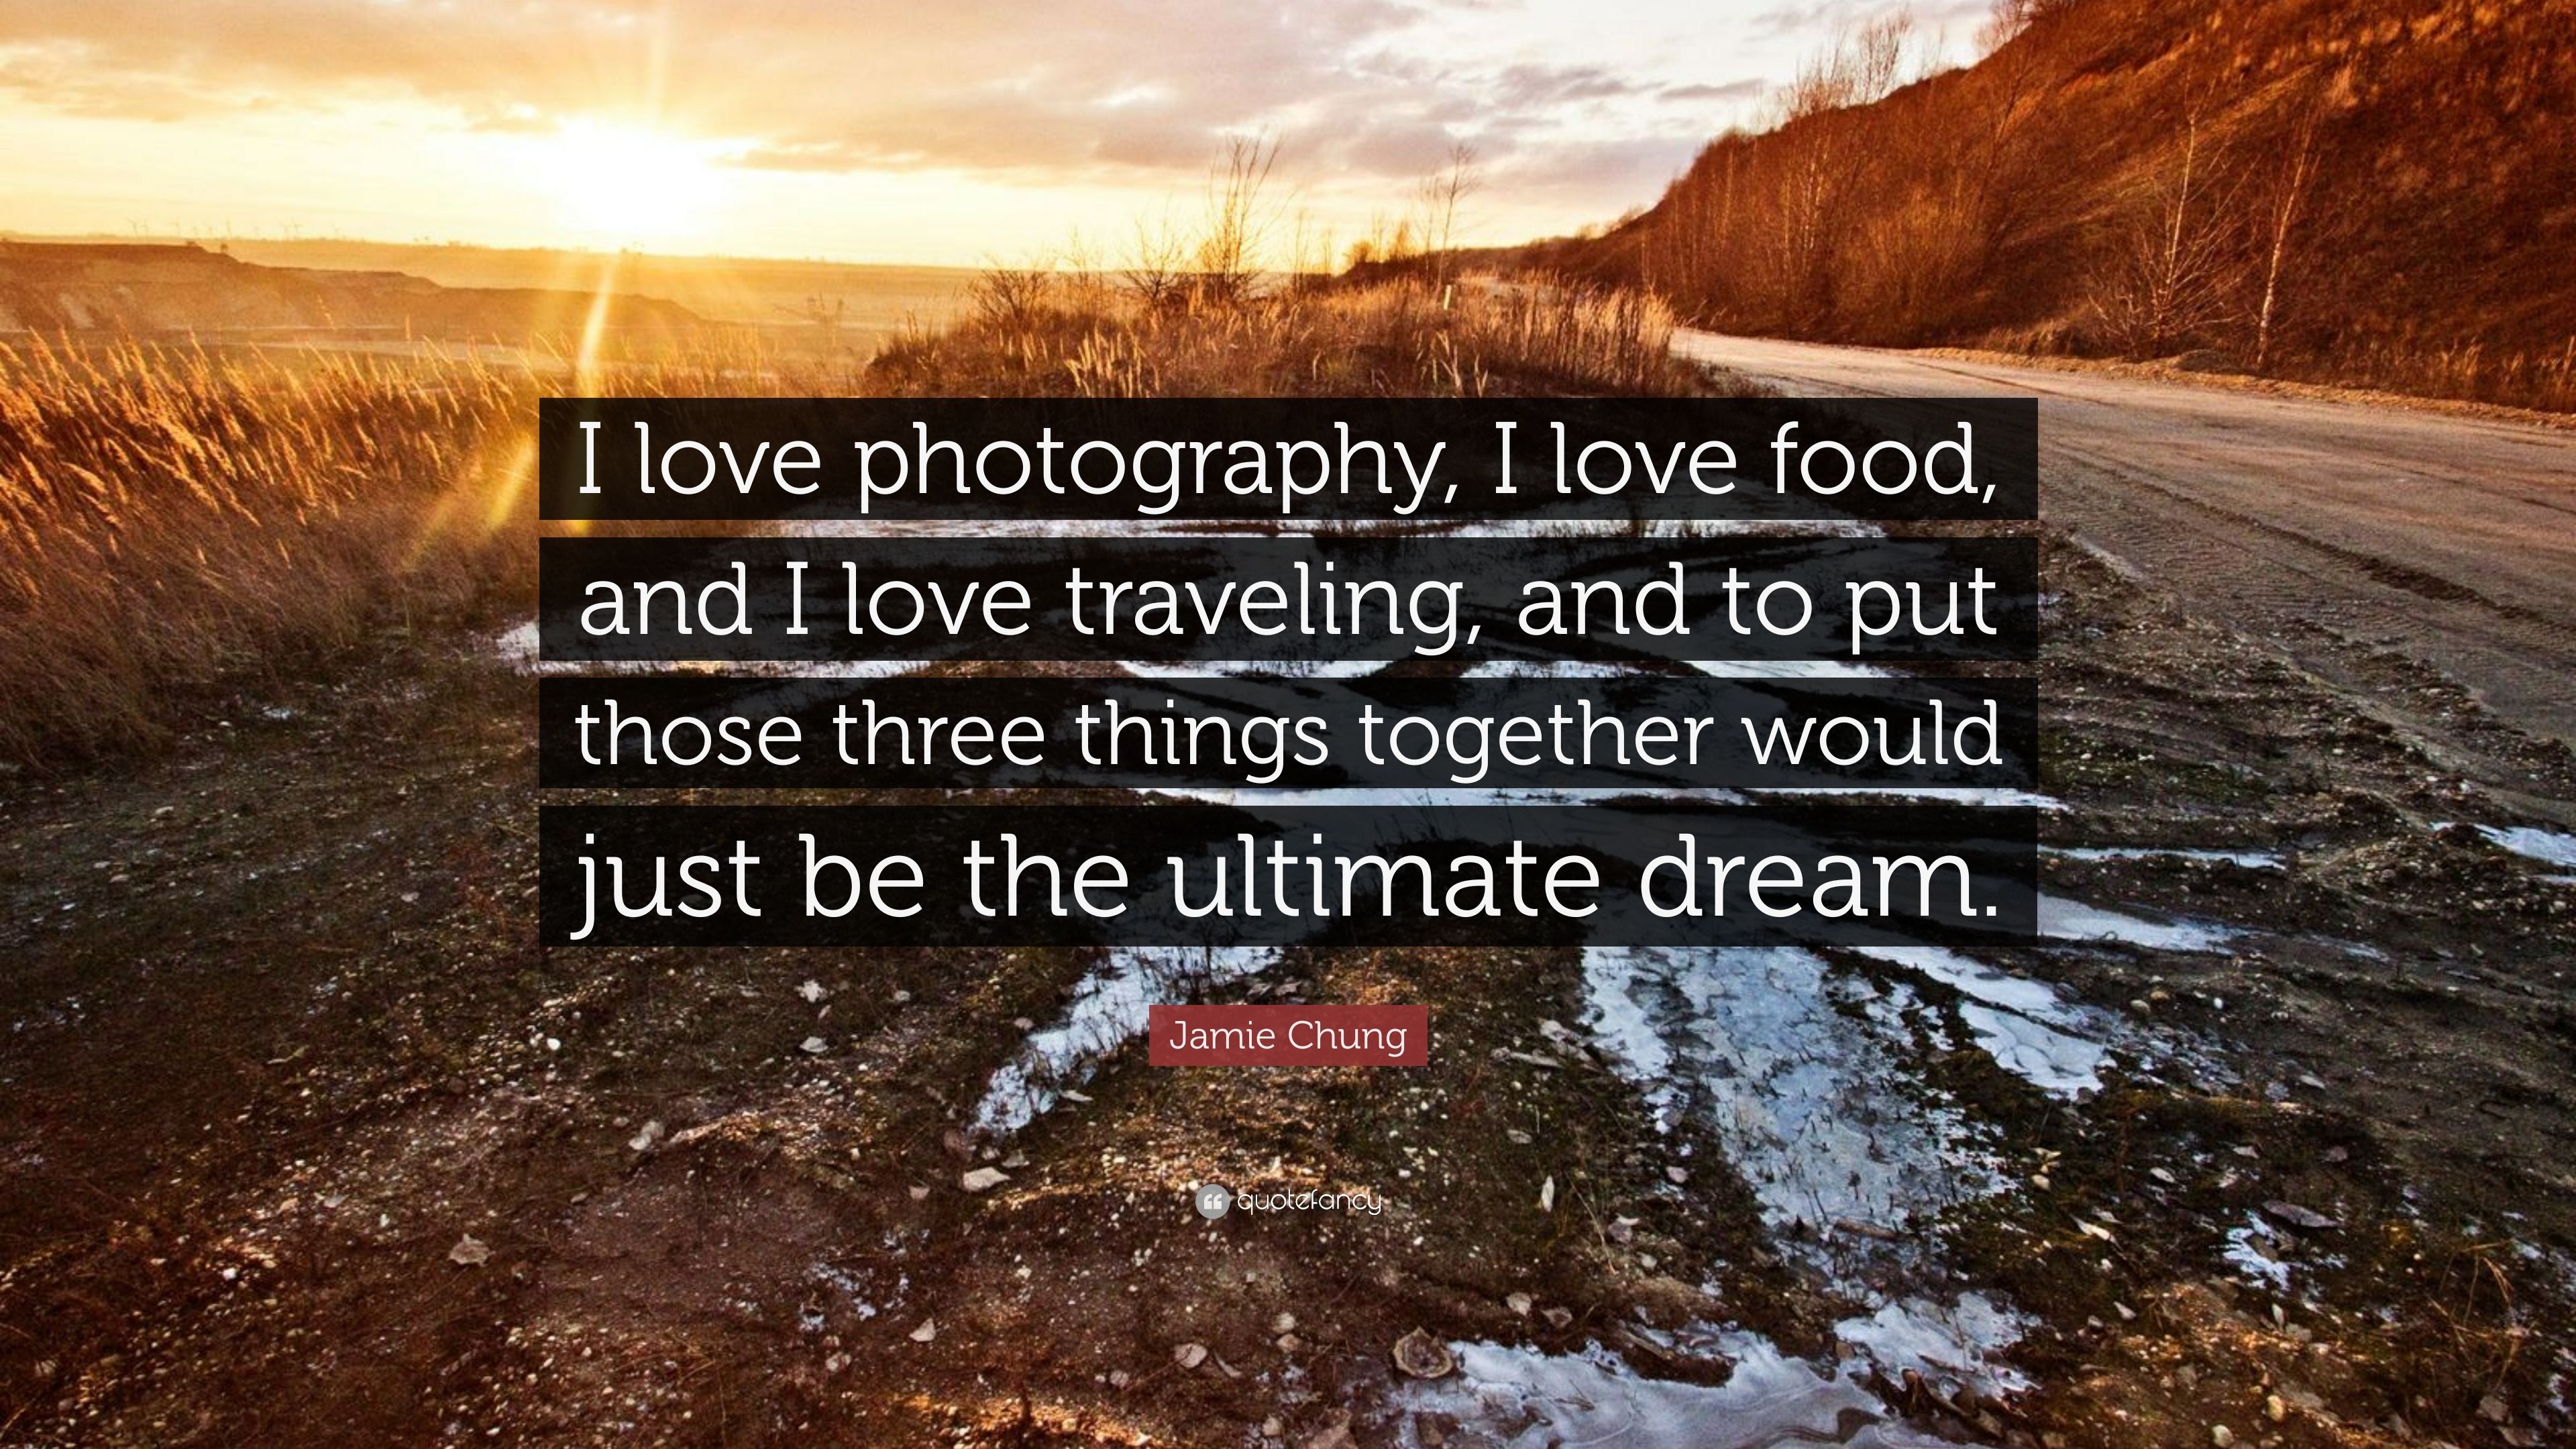 Jamie Chung Quote: “I love photography, I love food, and I love